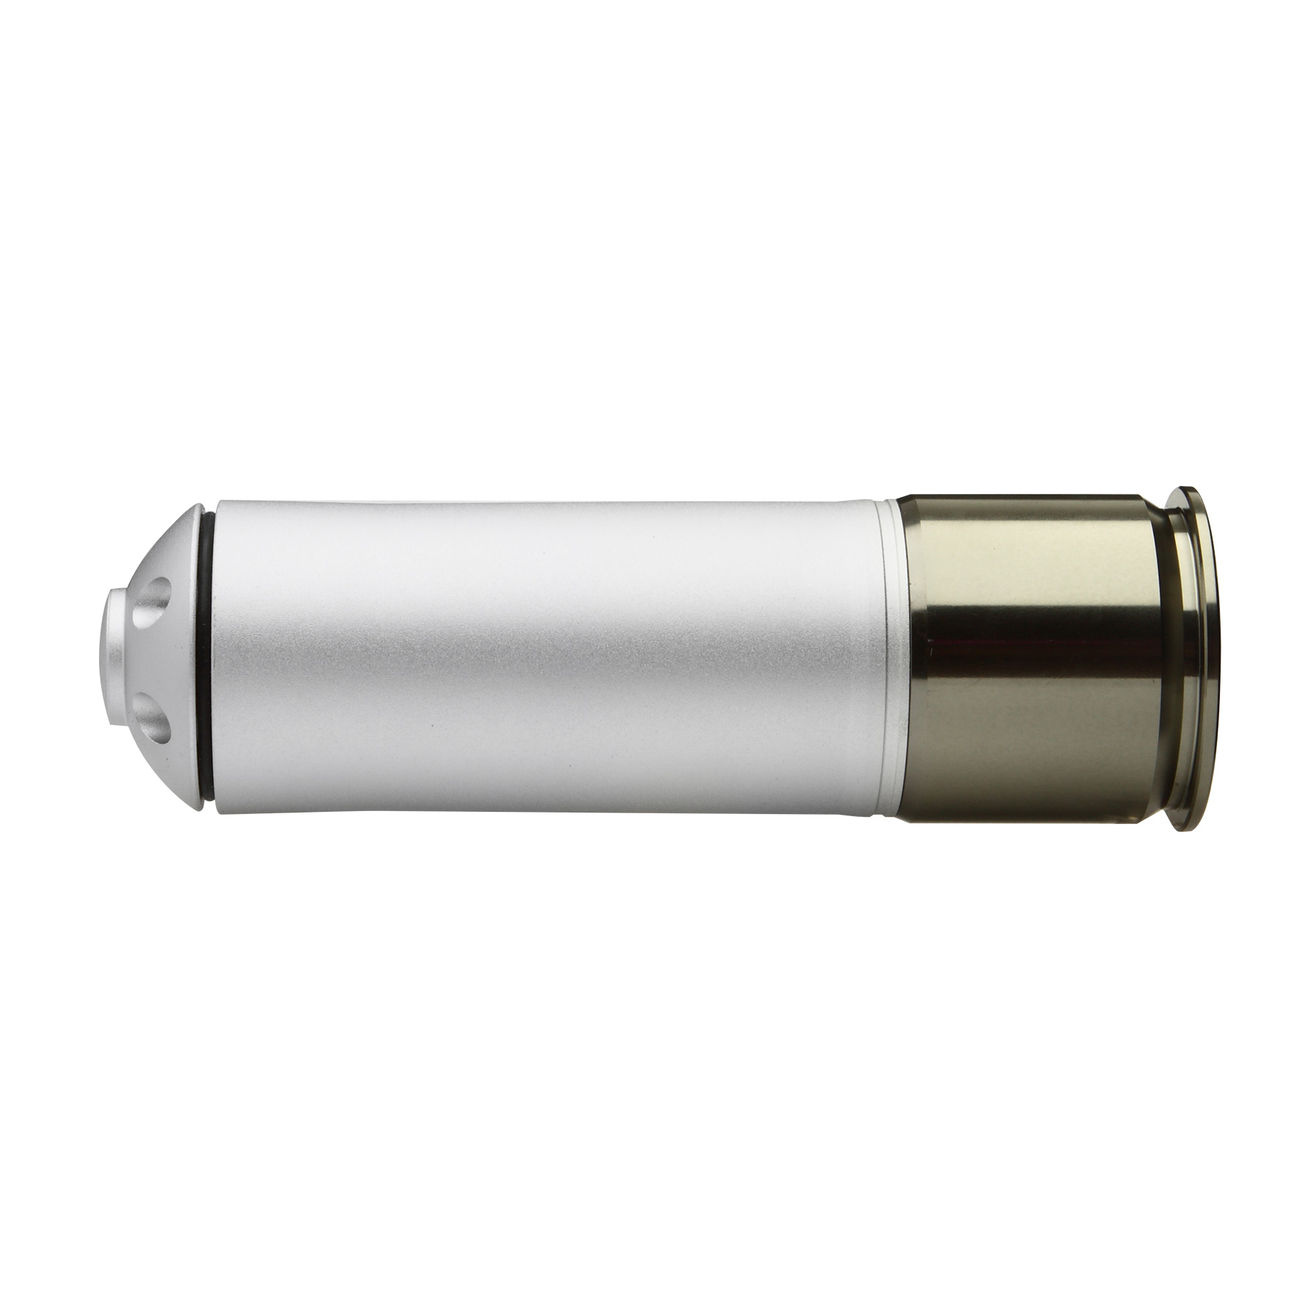 MadBull M583A1 40mm Vollmetall Hlse / Einlegepatrone f. 96 6mm BBs grau Bild 1